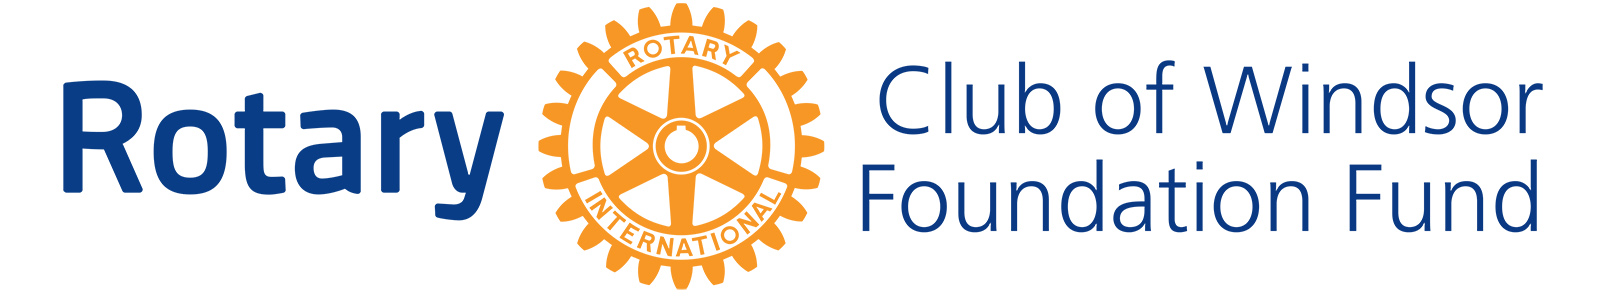 Foundation Fund | Rotary Club of Windsor 1918